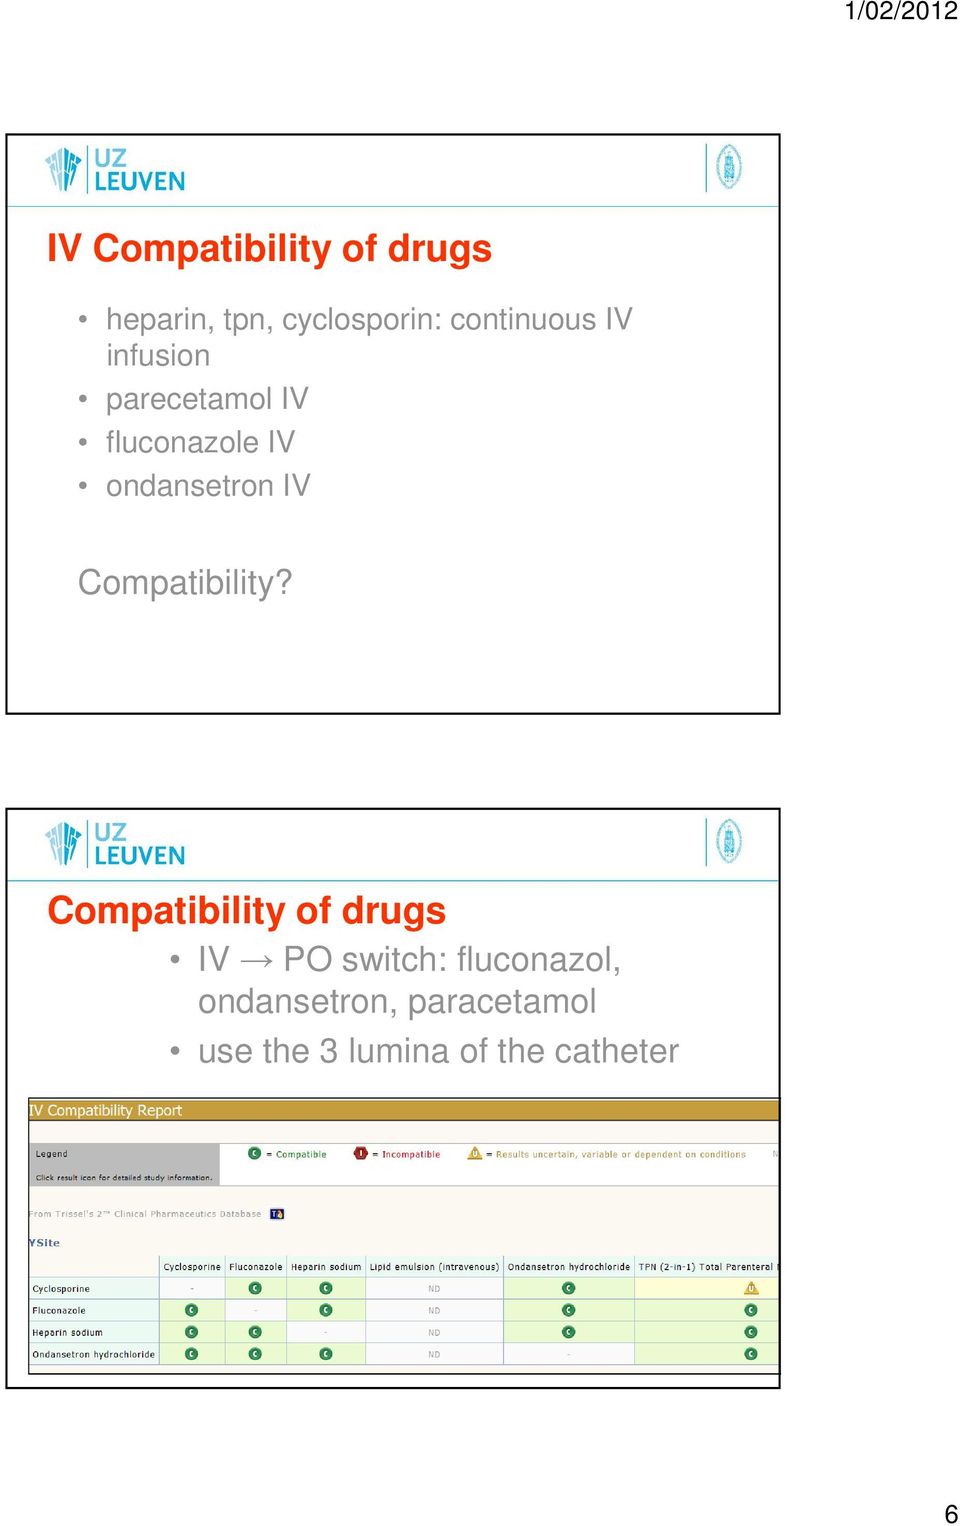 ondansetron IV Compatibility?